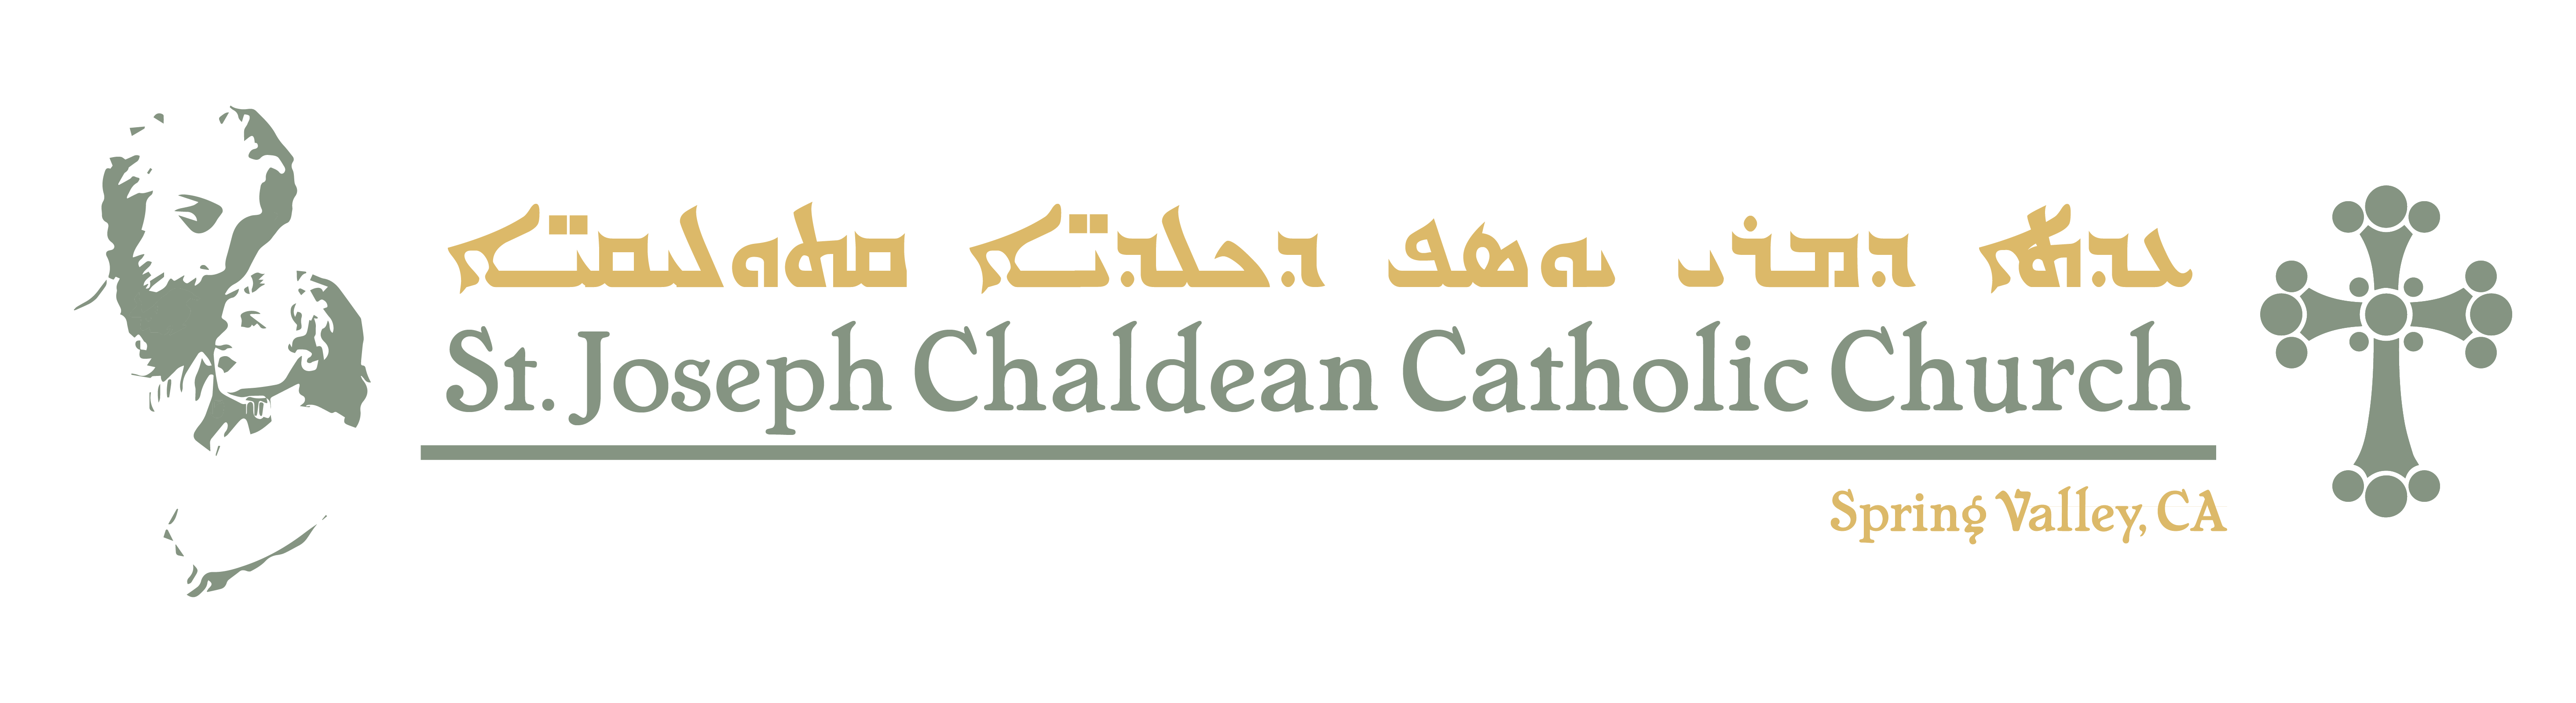 St Joseph Chaldean Catholic Church – Spring Valley, CA Logo